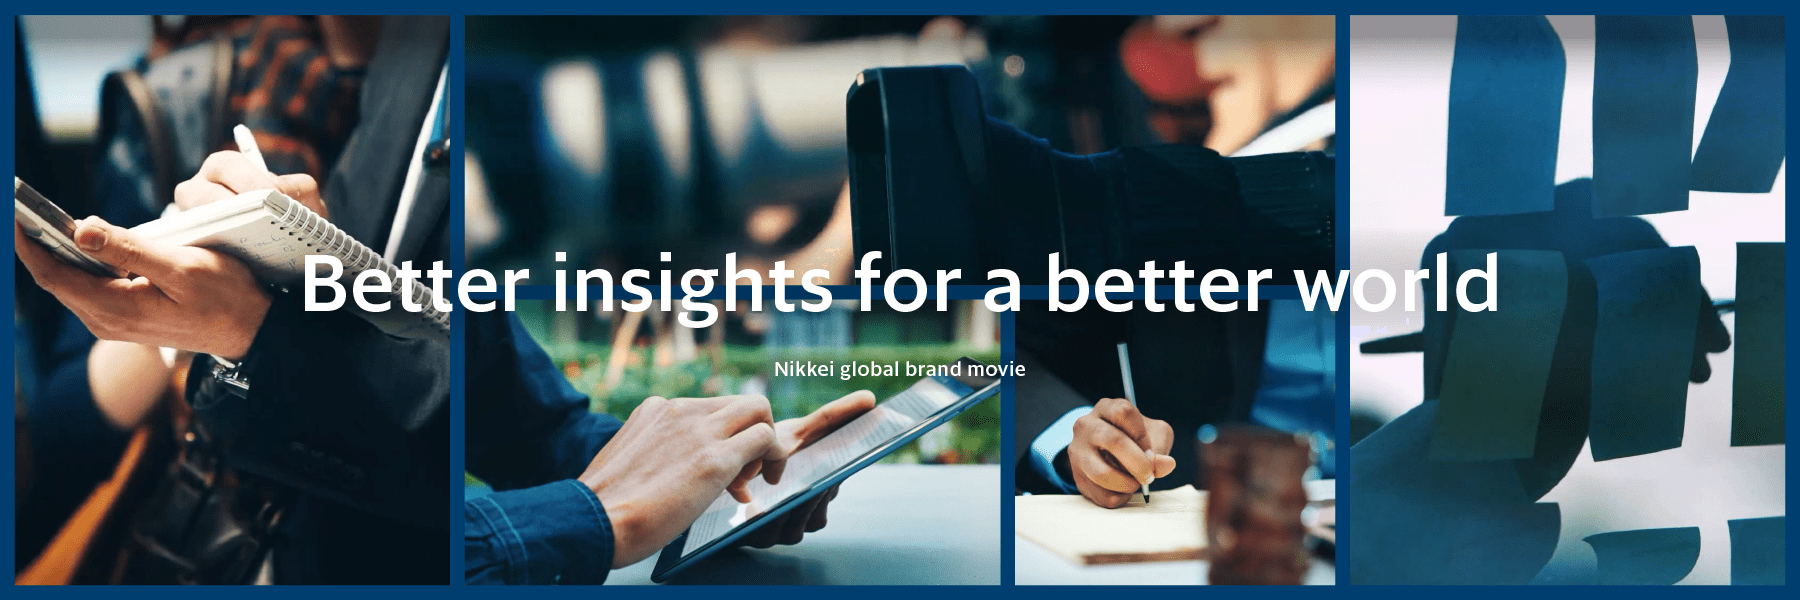 Nikkei global brand movie - Better insights for a better world